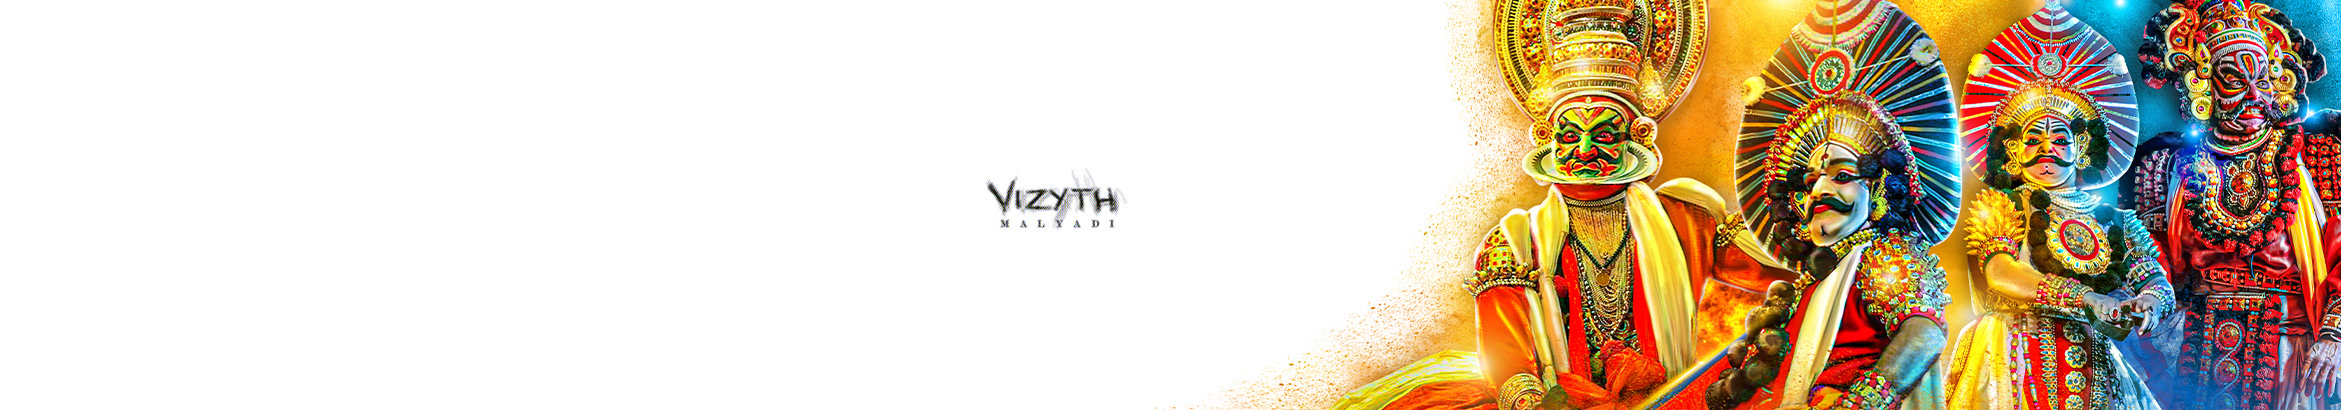 Vizyth Malyadi's profile banner